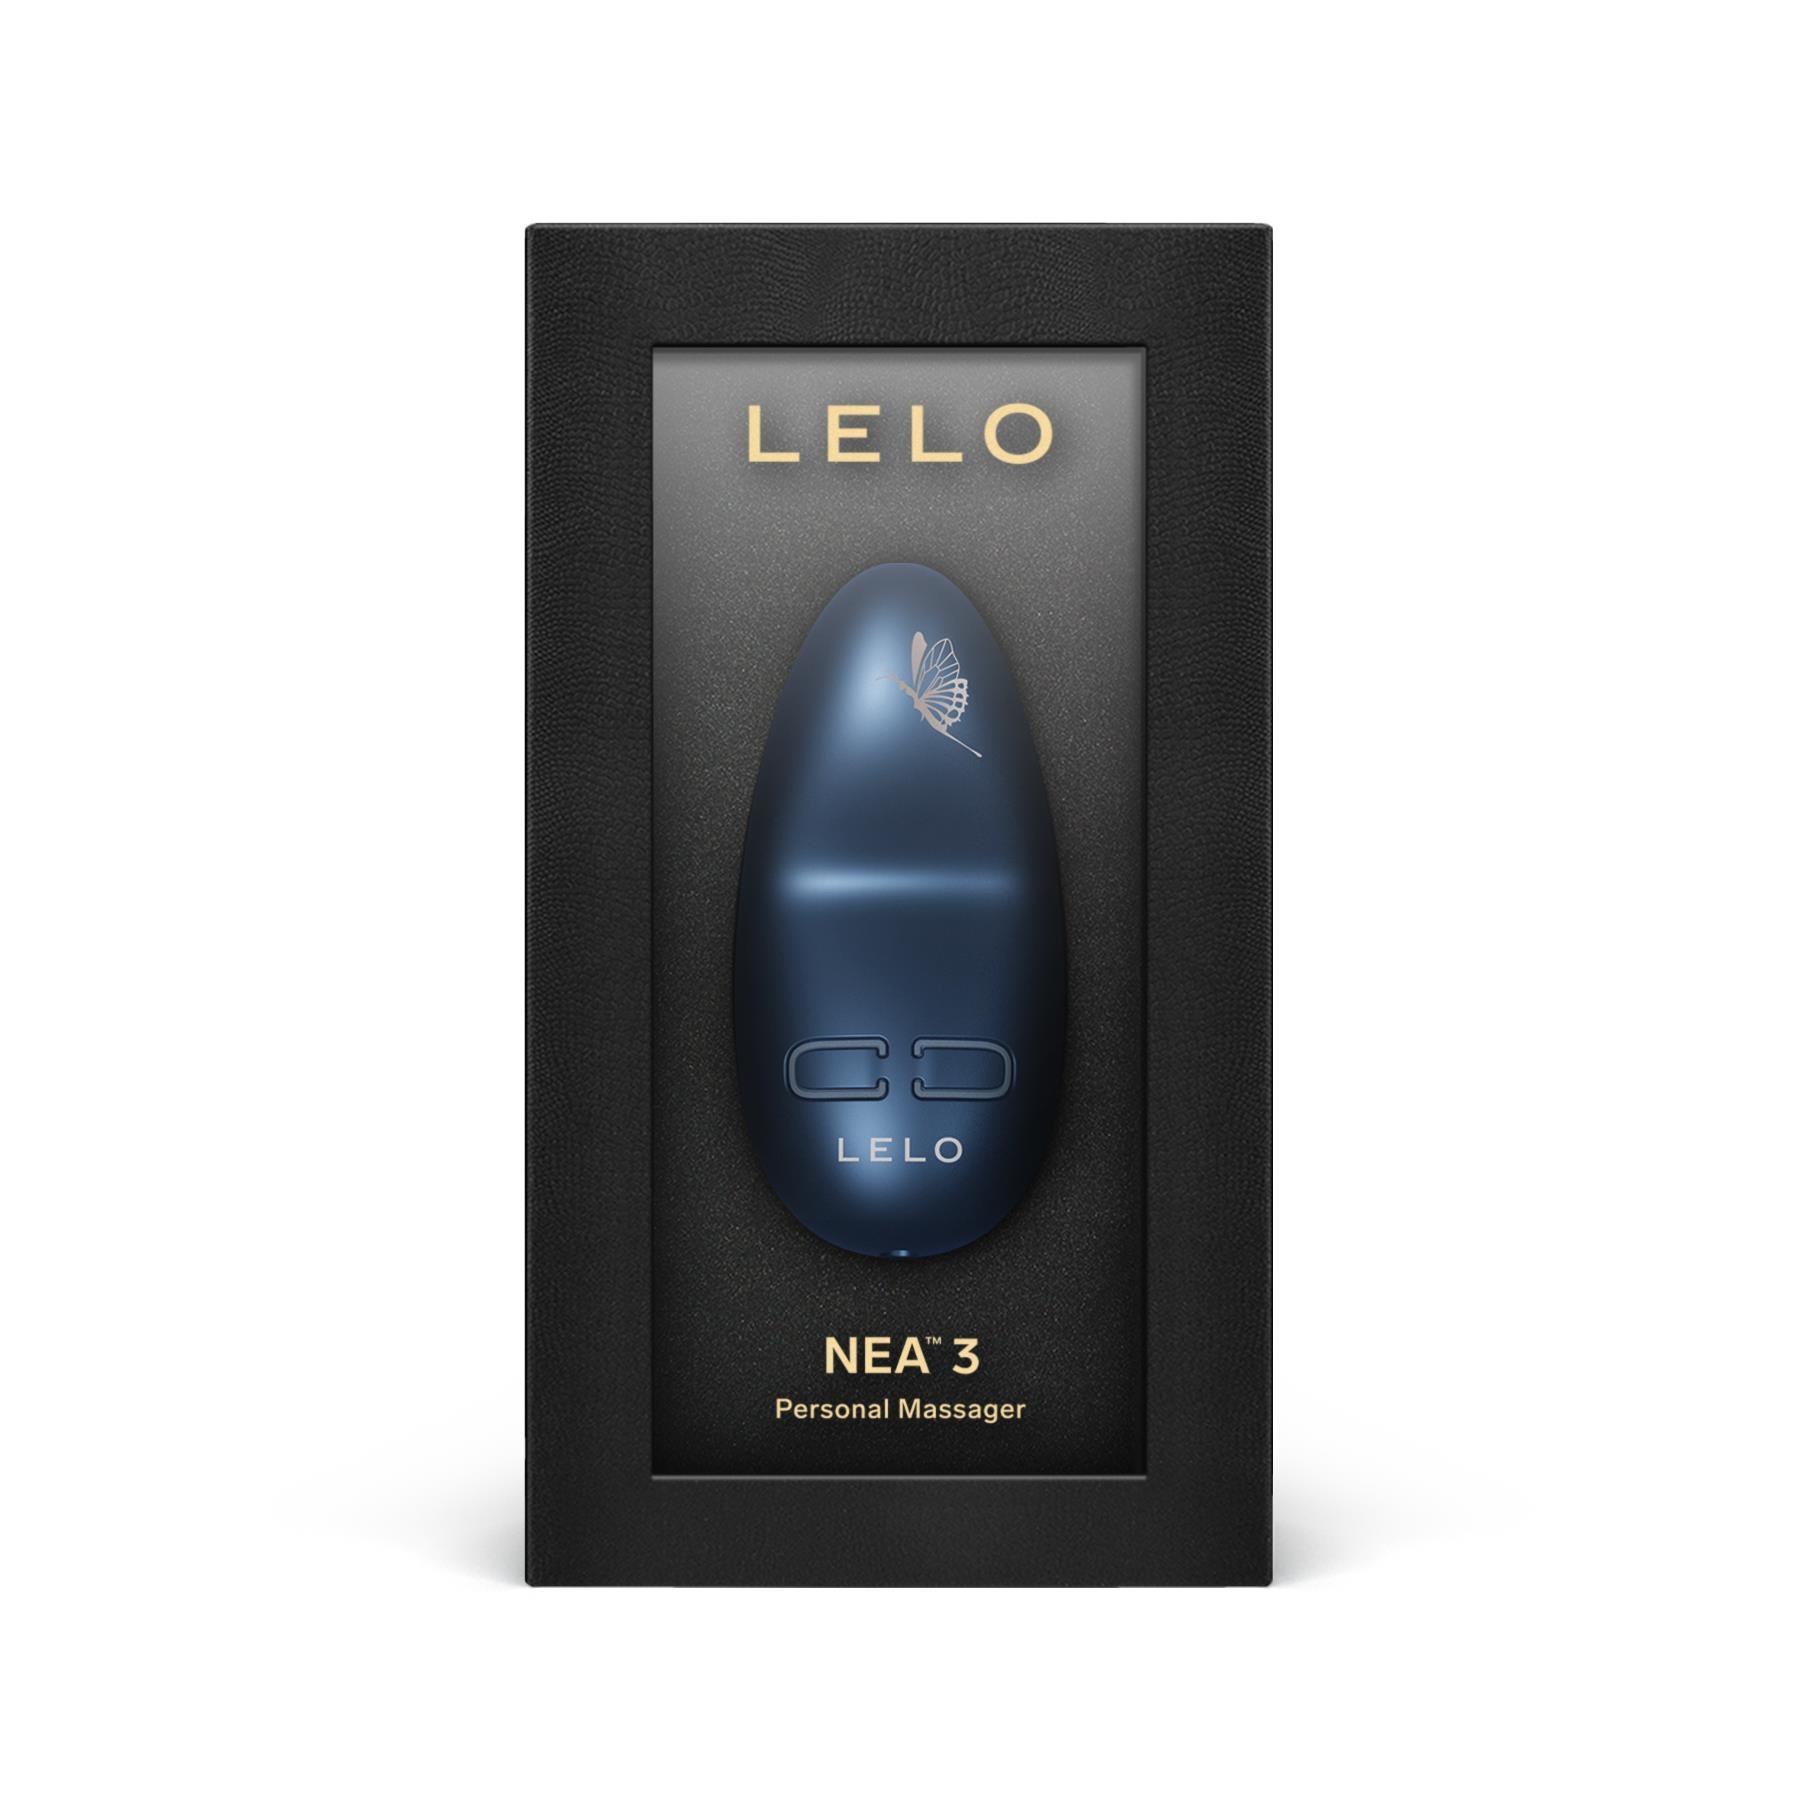 Lelo Nea 3 Personal Massager - Packaging